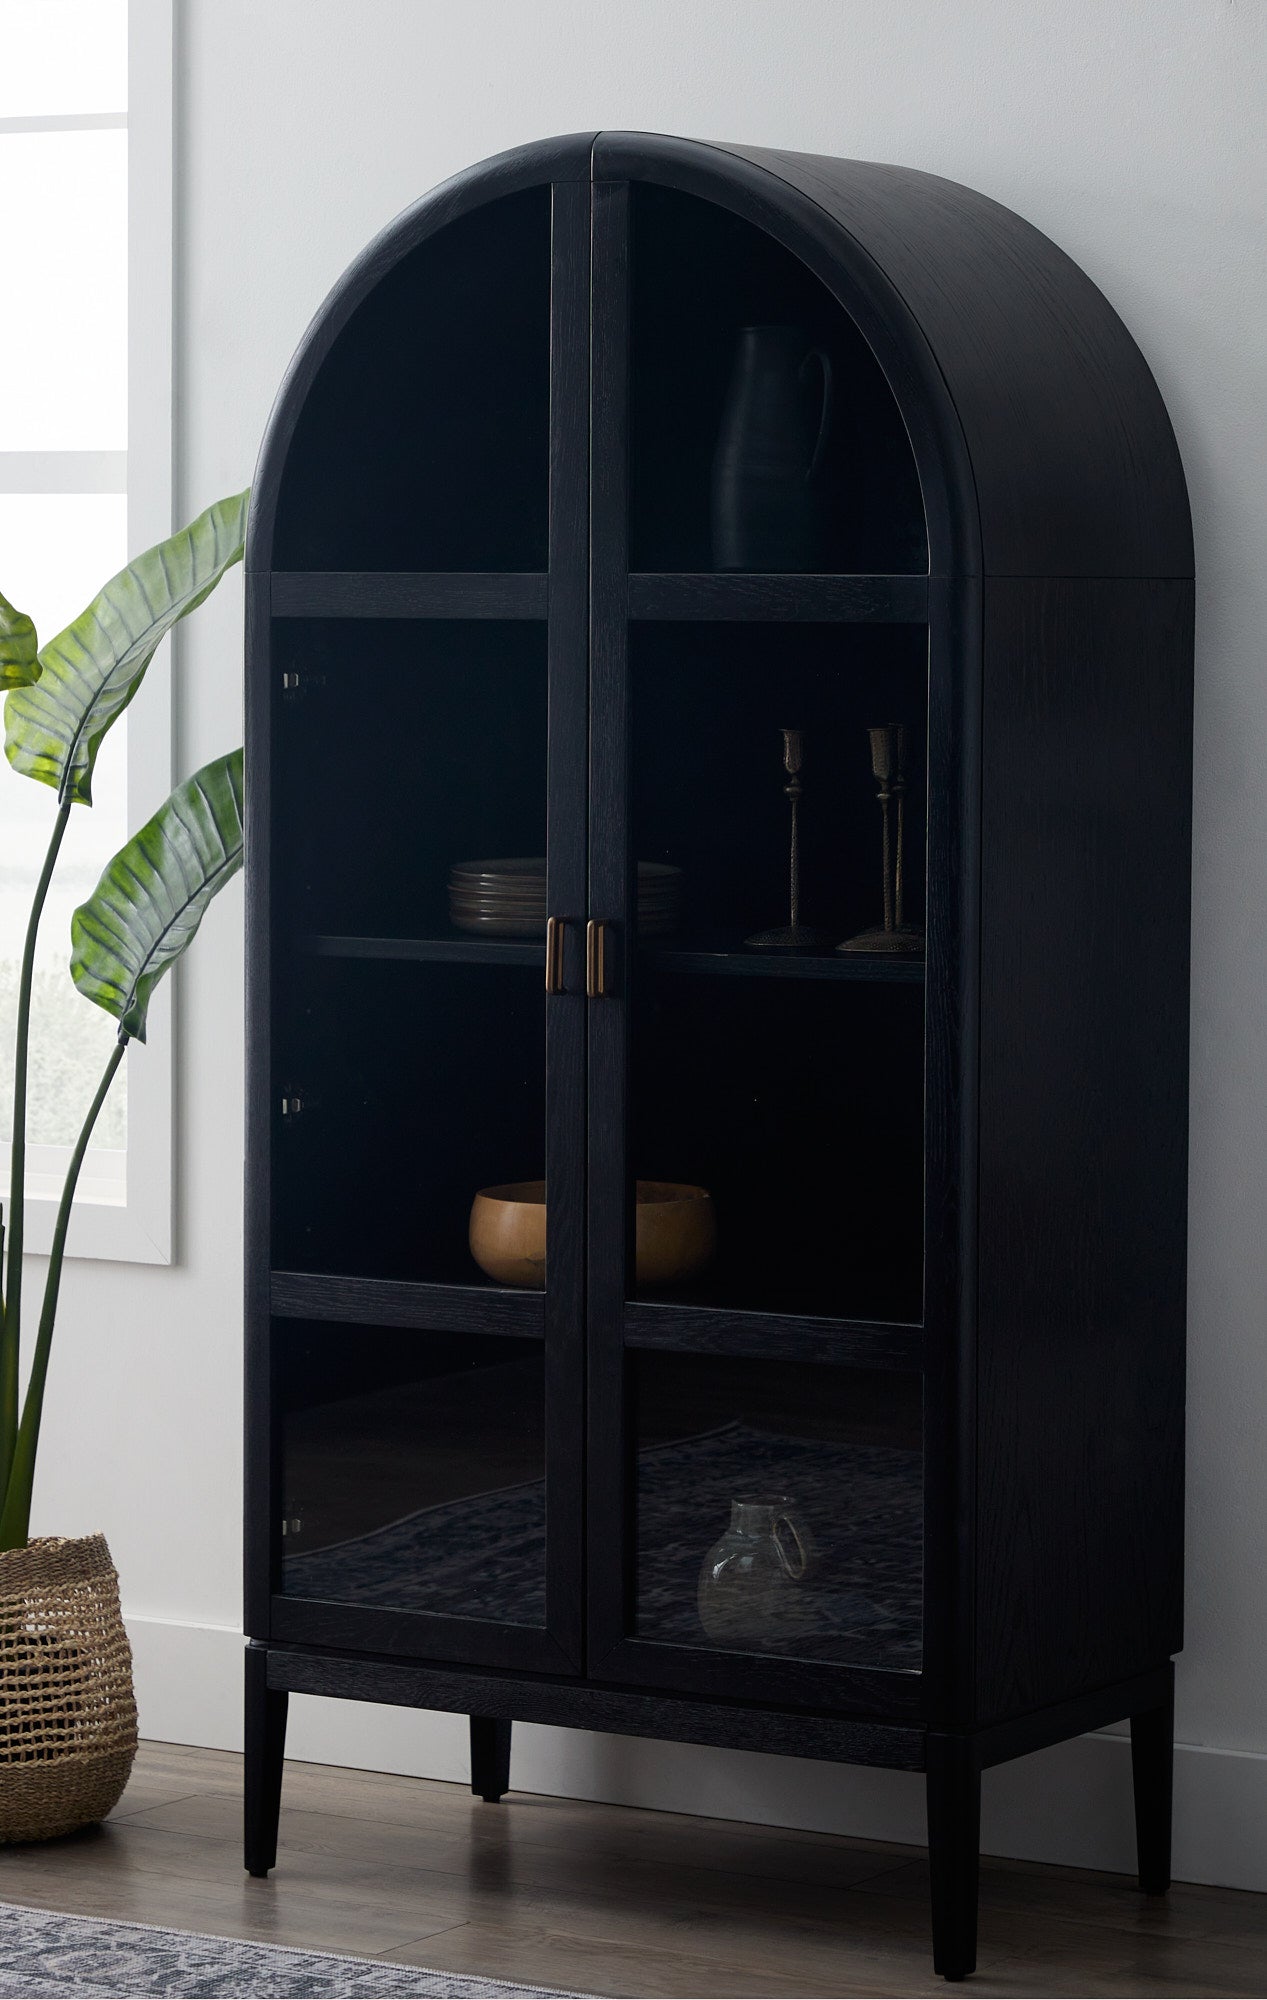 Alain glass door cabinet in the color black